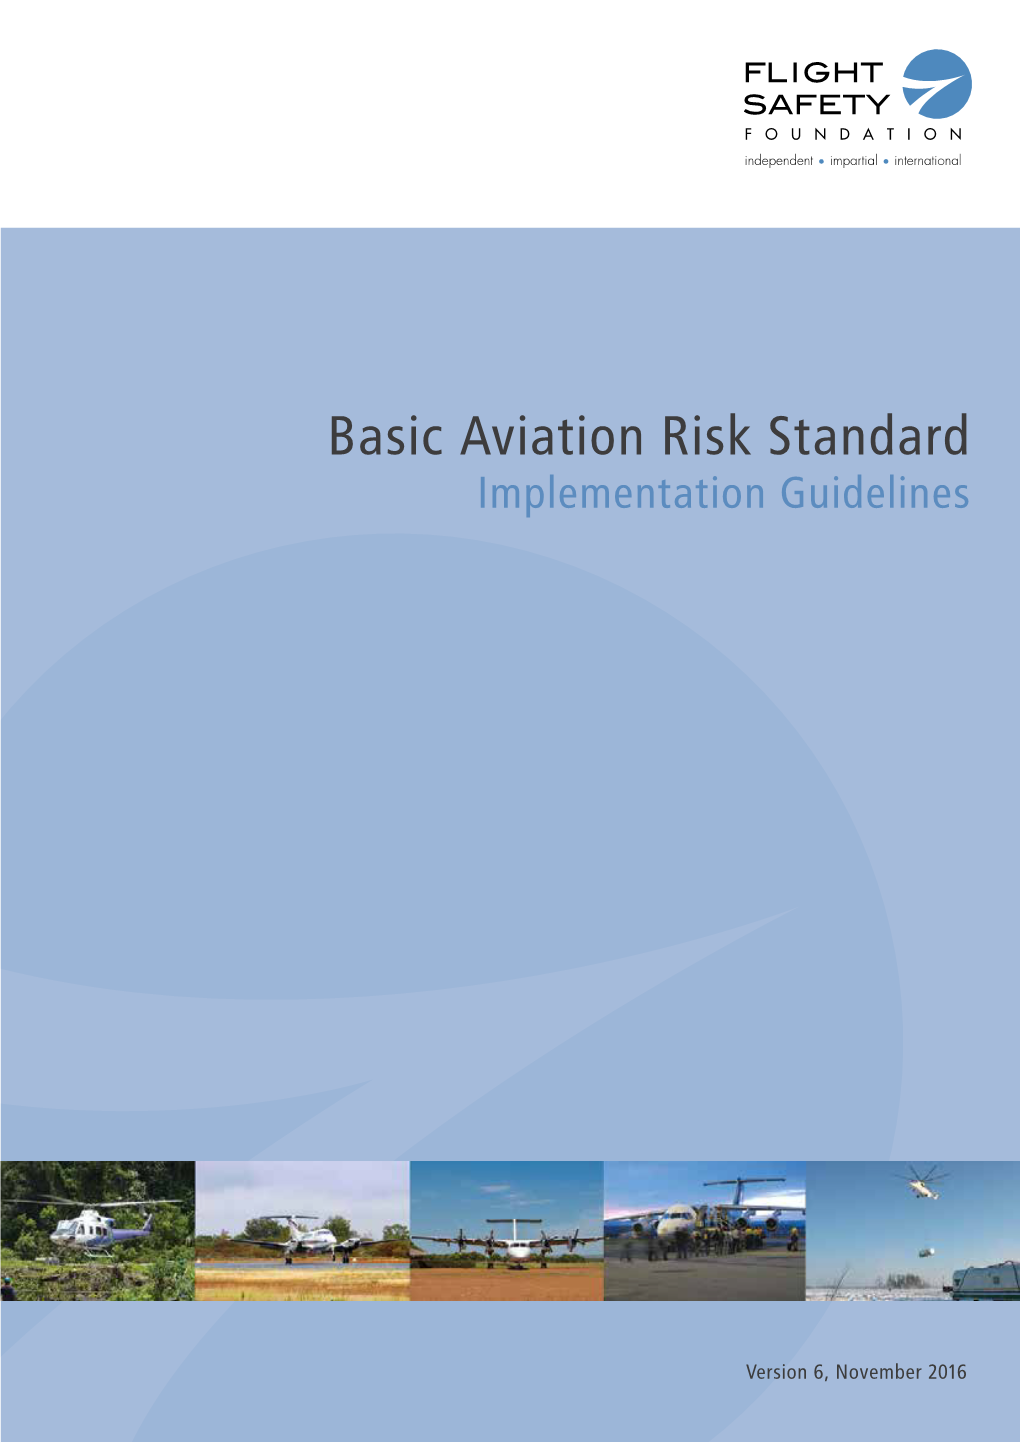 Basic Aviation Risk Standard Implementation Guidelines